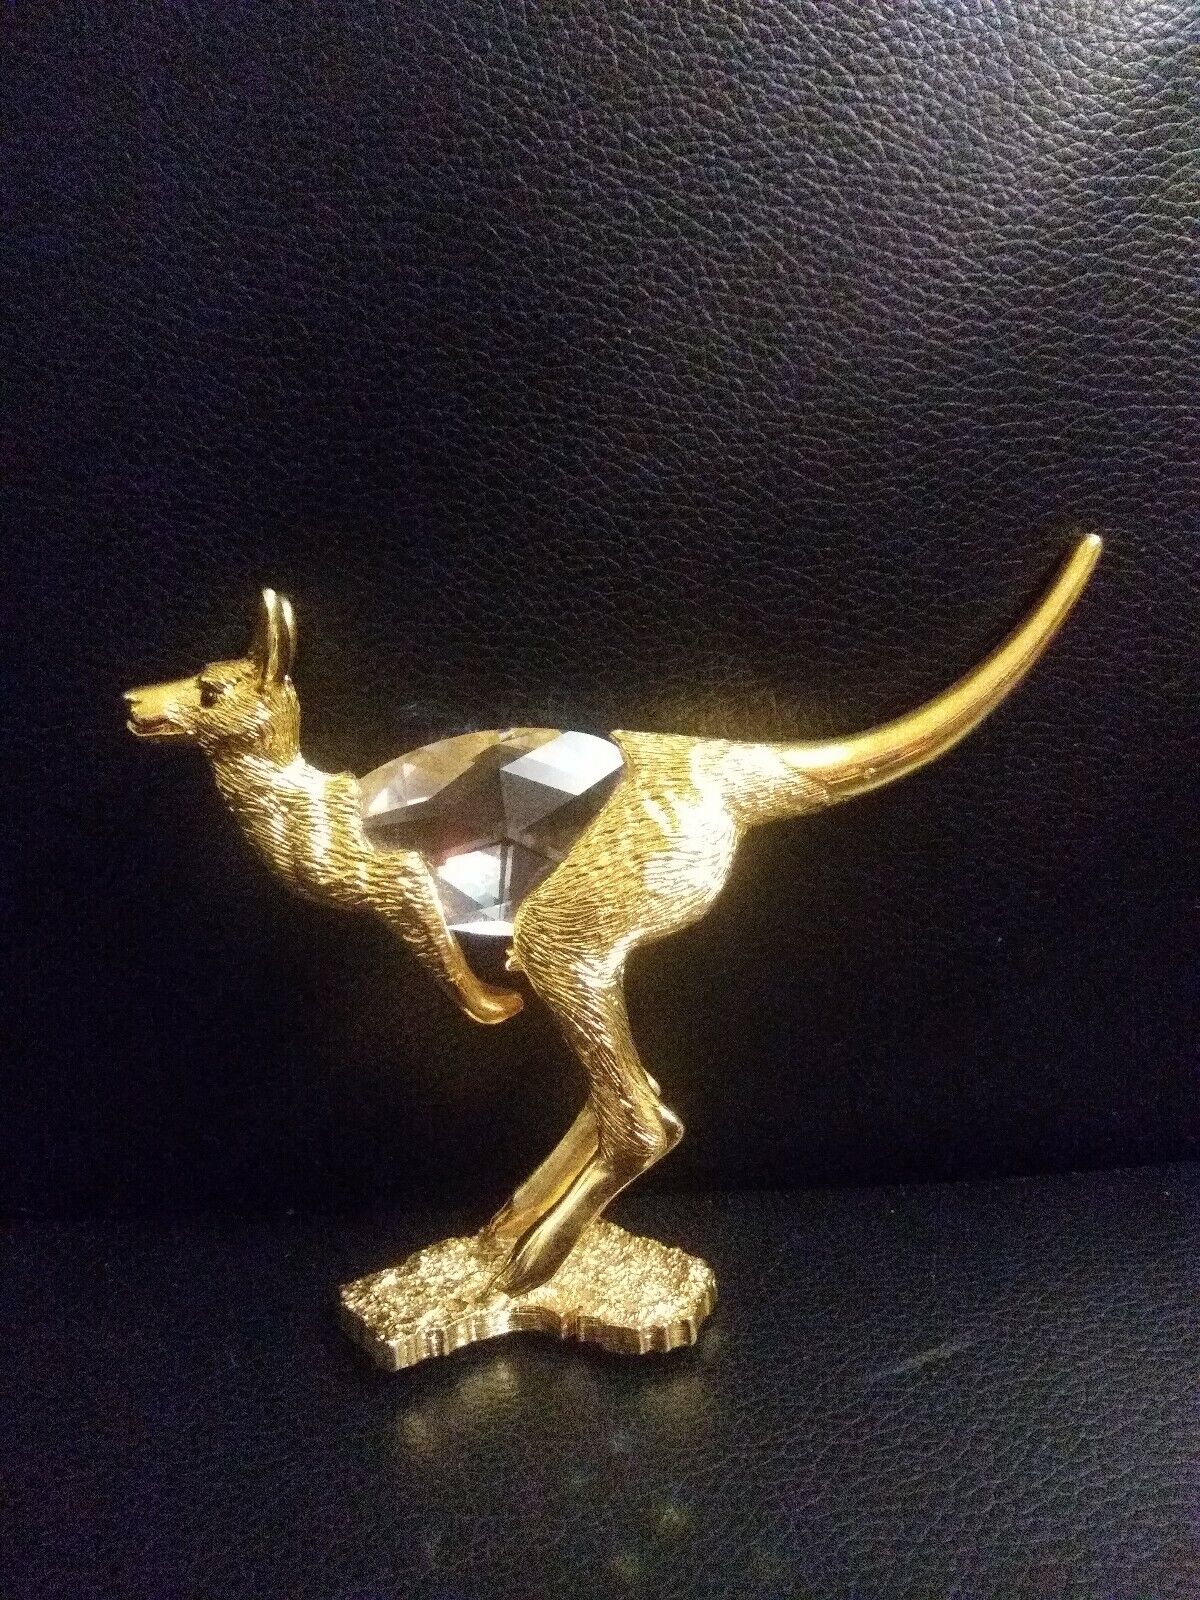 Gold Plated Kangaro Figurine Austrian Crystal. Pewter X-L-R Reg Design.